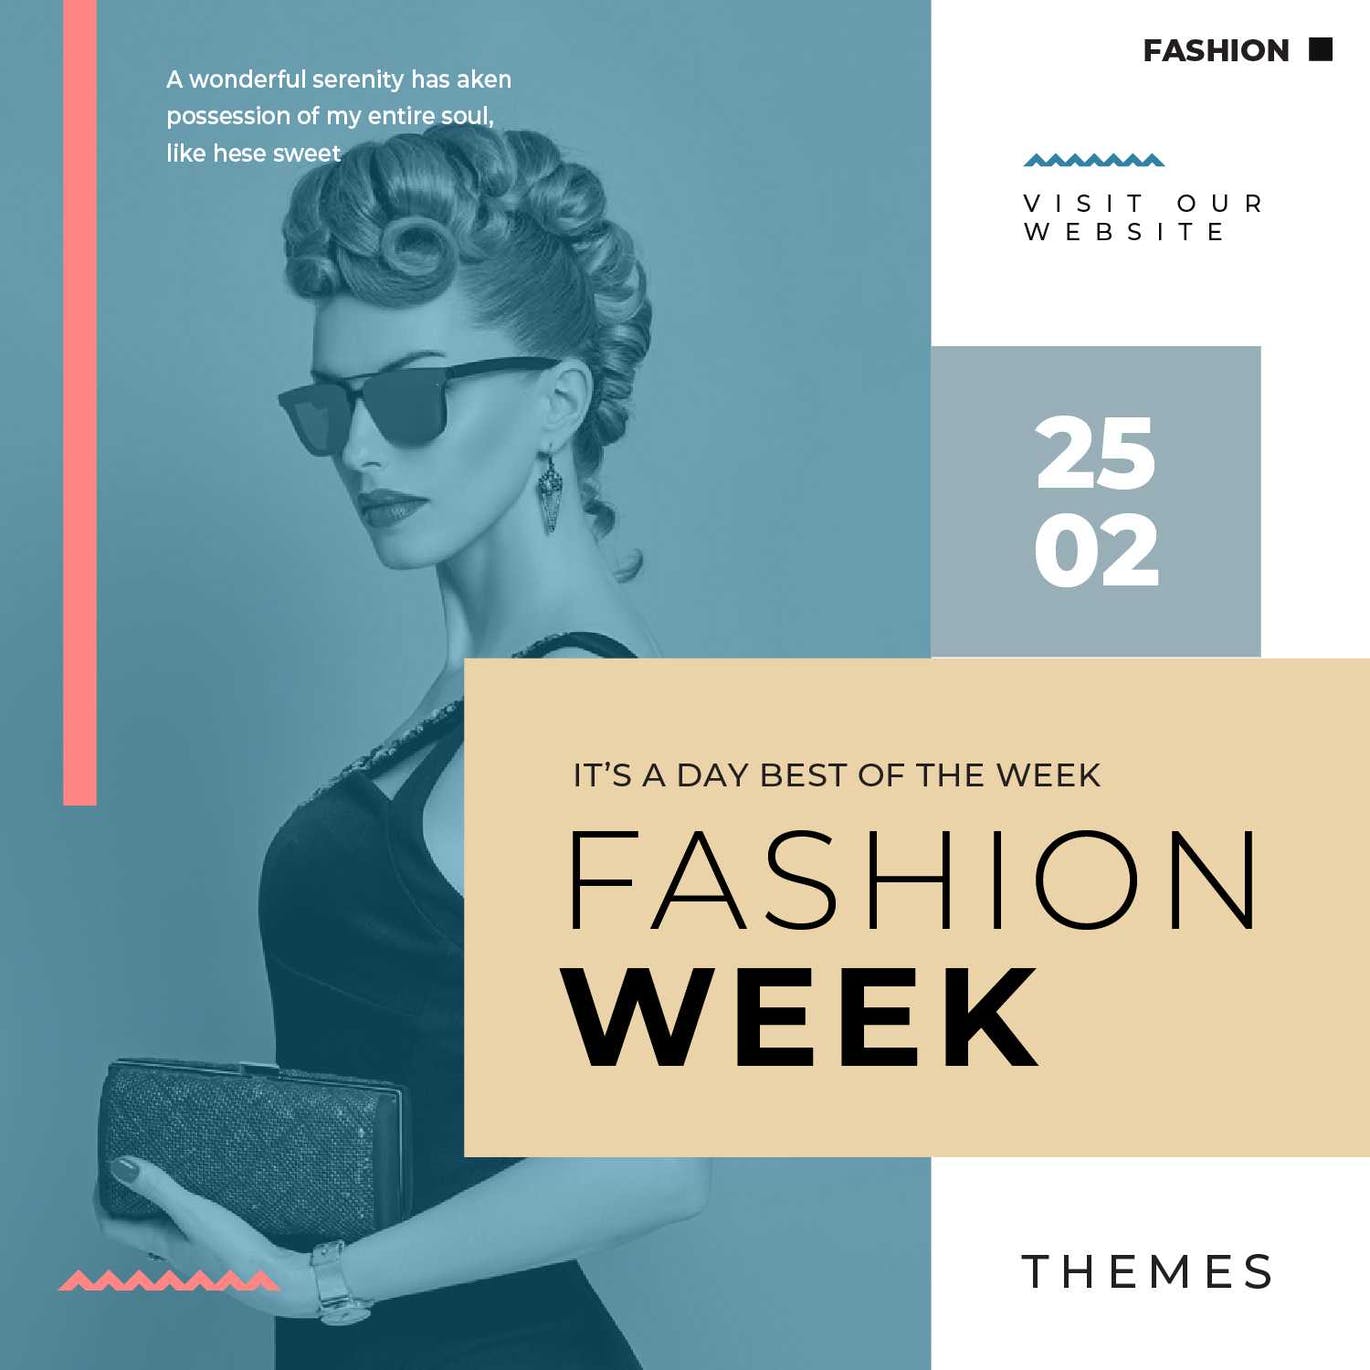 Fashion Week Instagram Feed Powerpoint Template